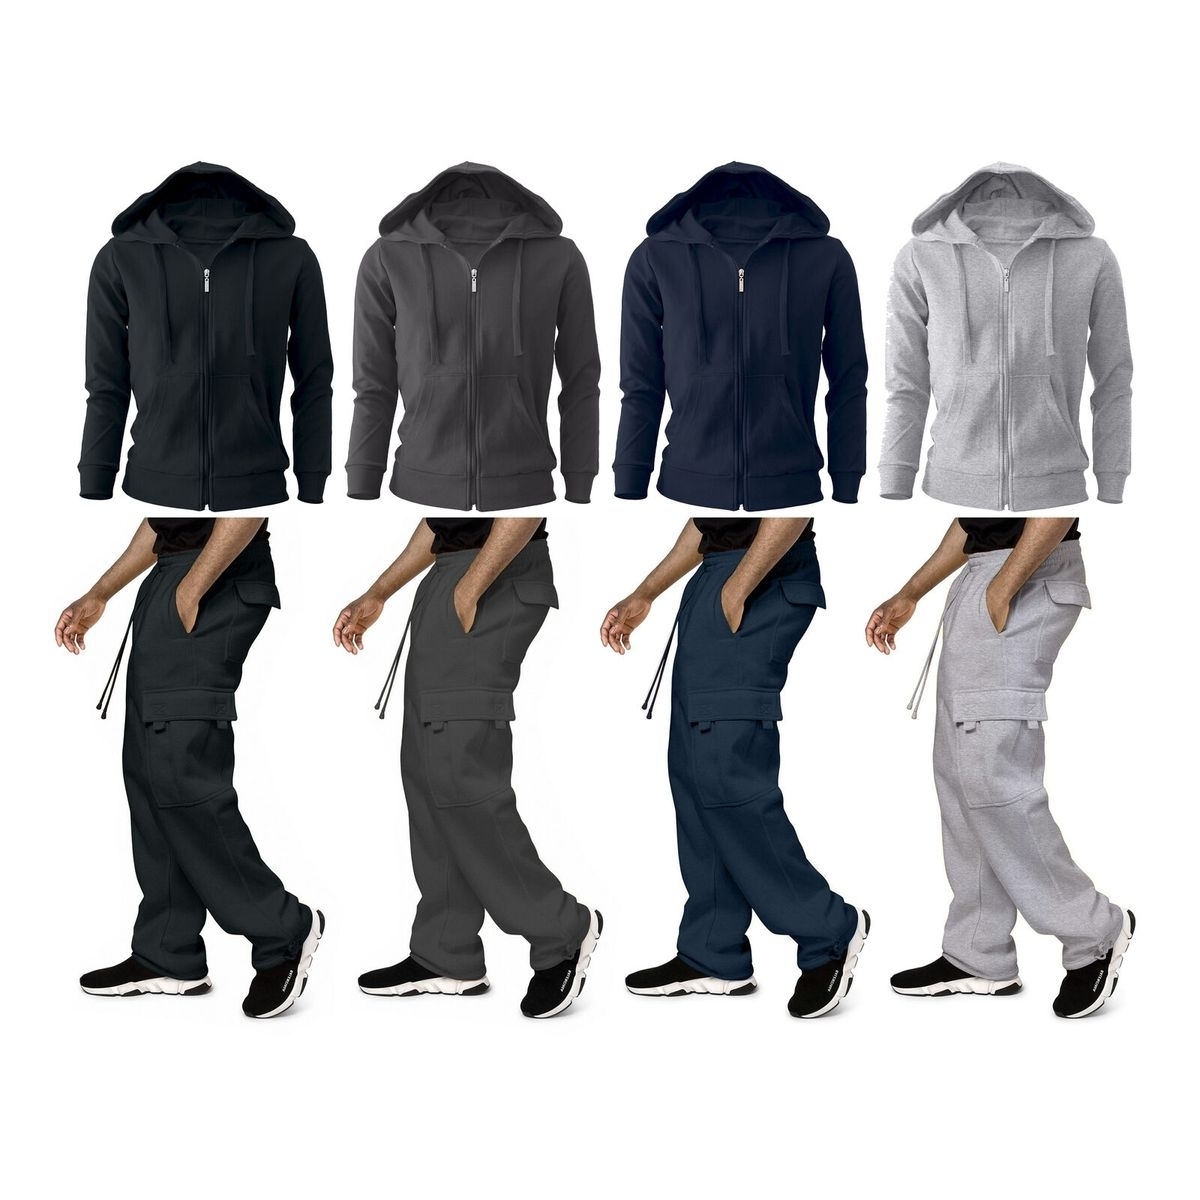 Multi-Pack: Men's Big & Tall Winter Warm Athletic Active Cozy Fleece Lined Multi-Pocket Full Zip Up Cargo Tracksuit - Navy, 1-pack, Medium